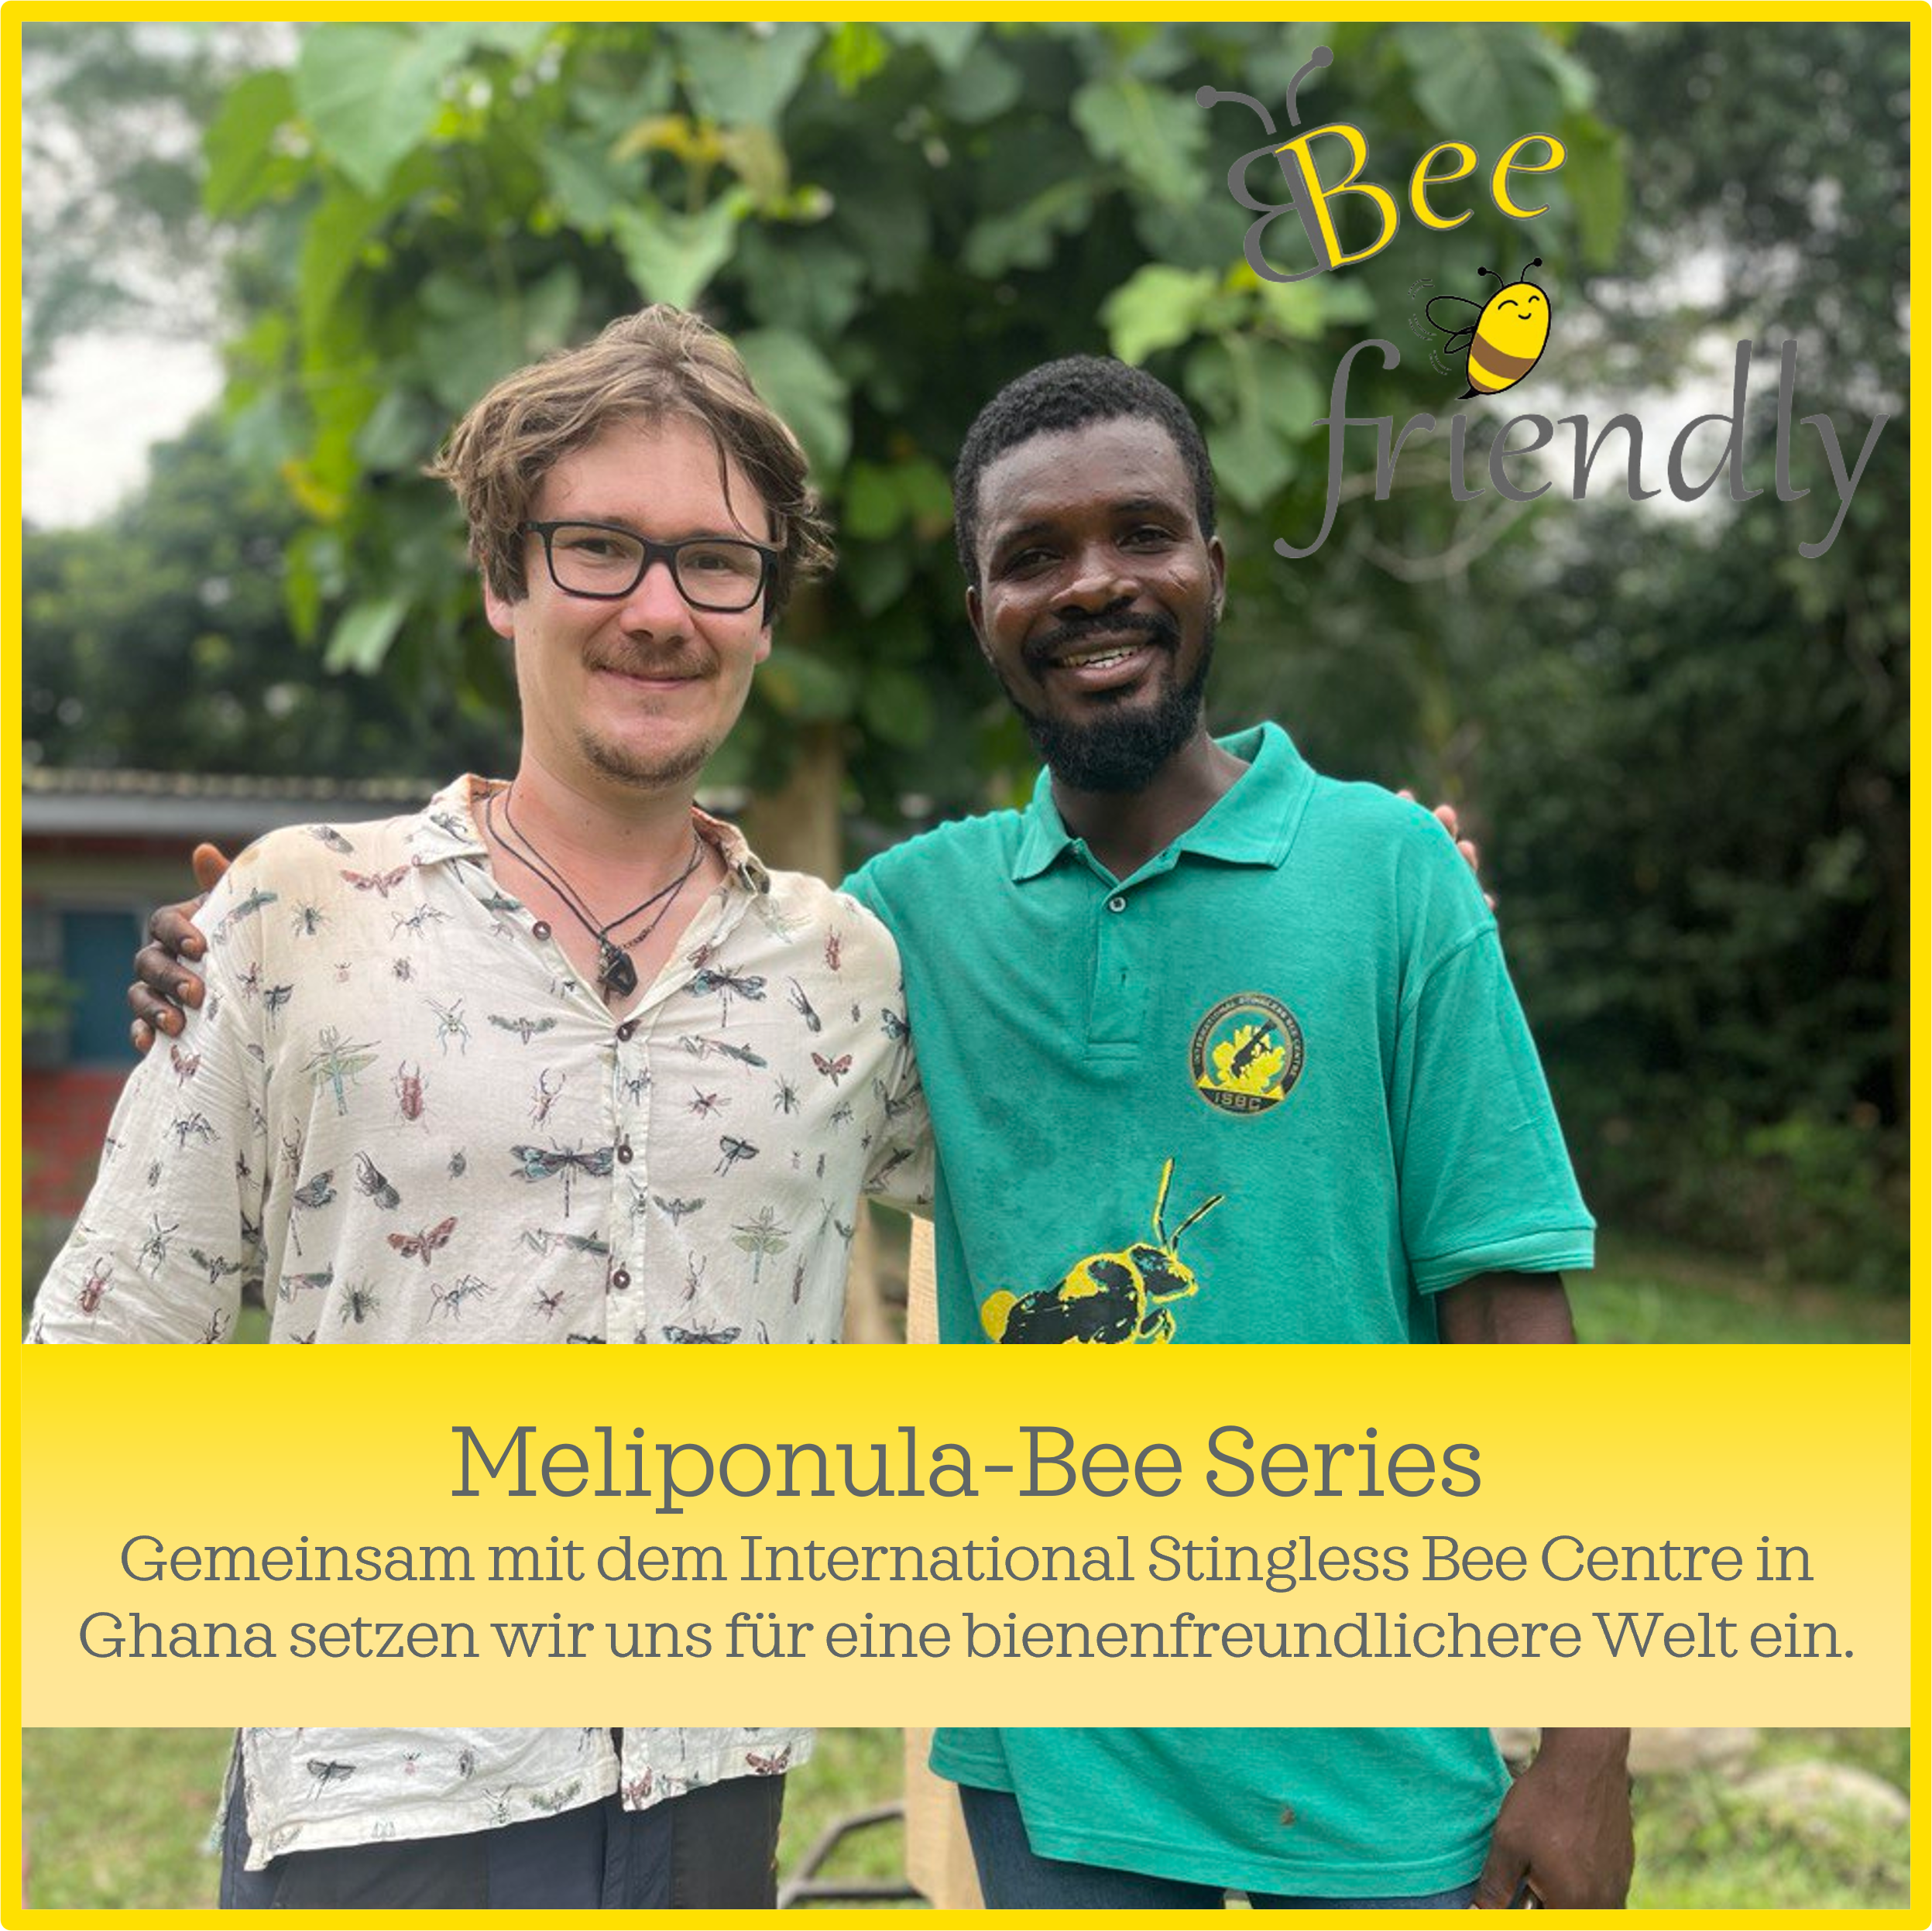 Meliponula-Bienen: Bee friendly in Ghana